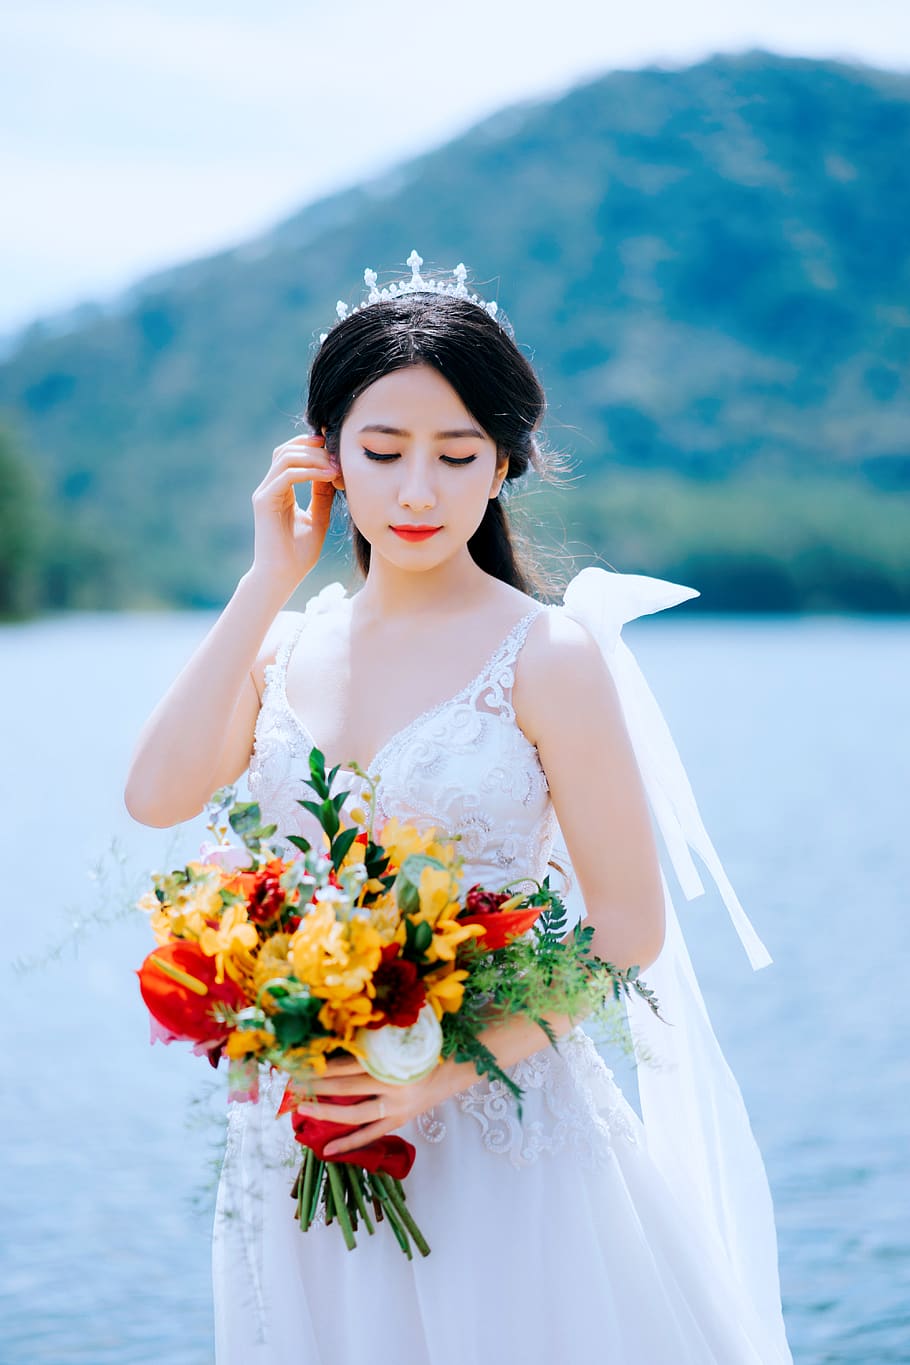 Woman Wearing Wedding Dress While Holding Her Hair, beautiful